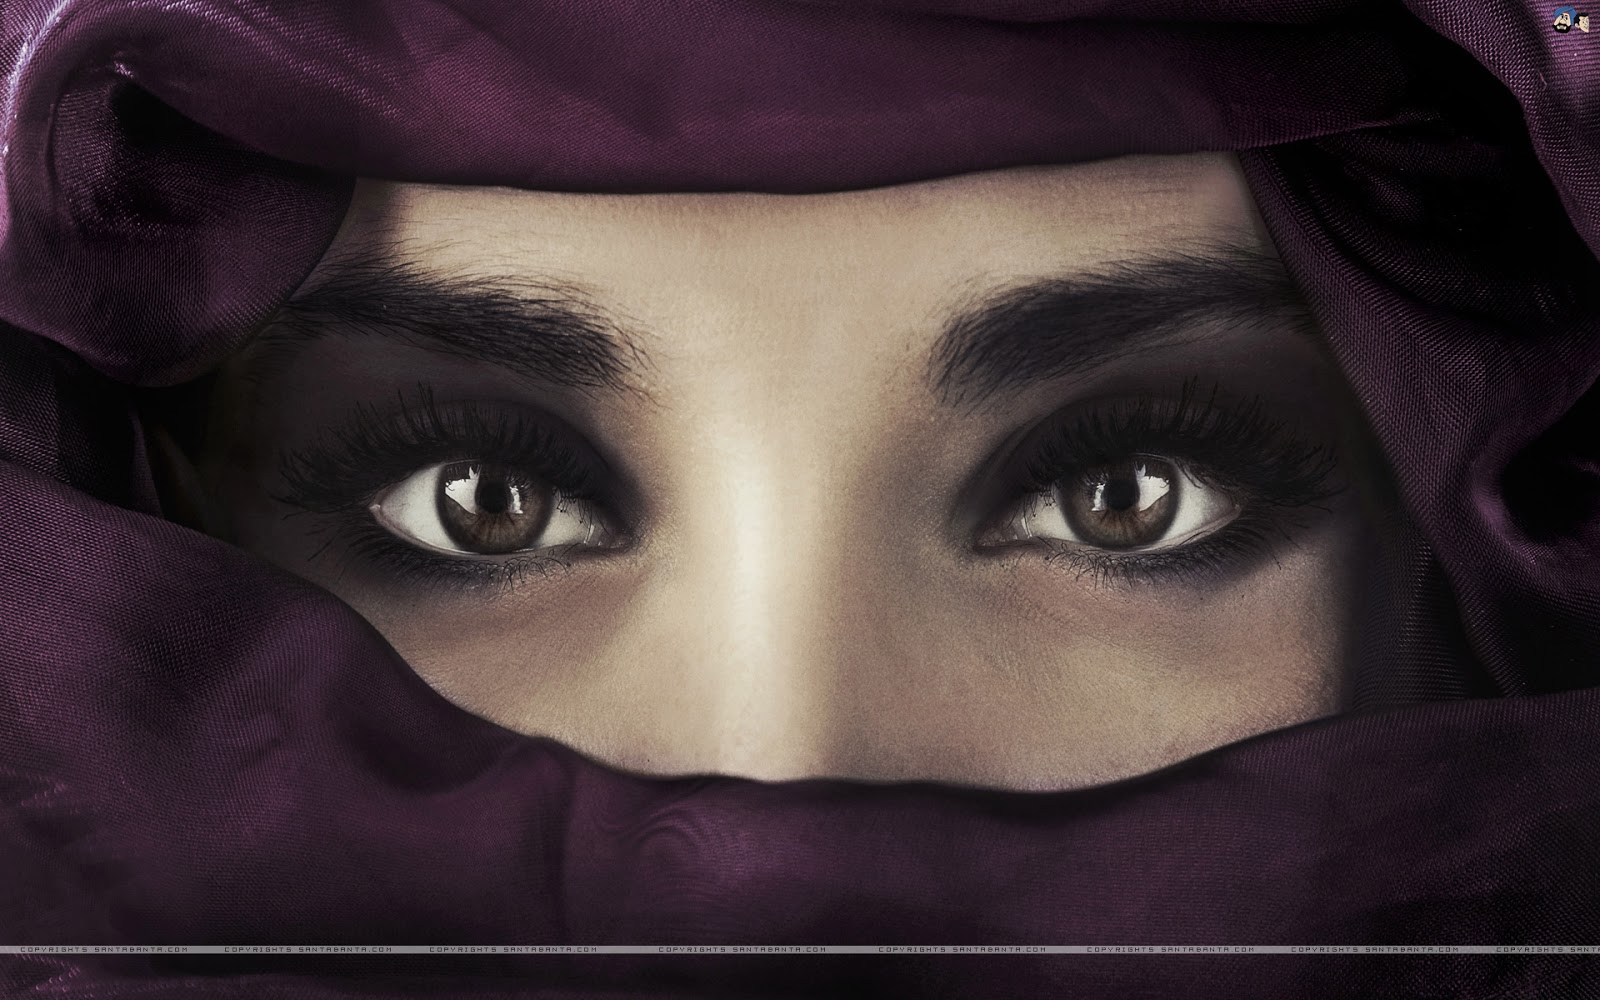 Koleksi Wallpaper Wanita Muslimah Bercadar Contoh Blog SEO